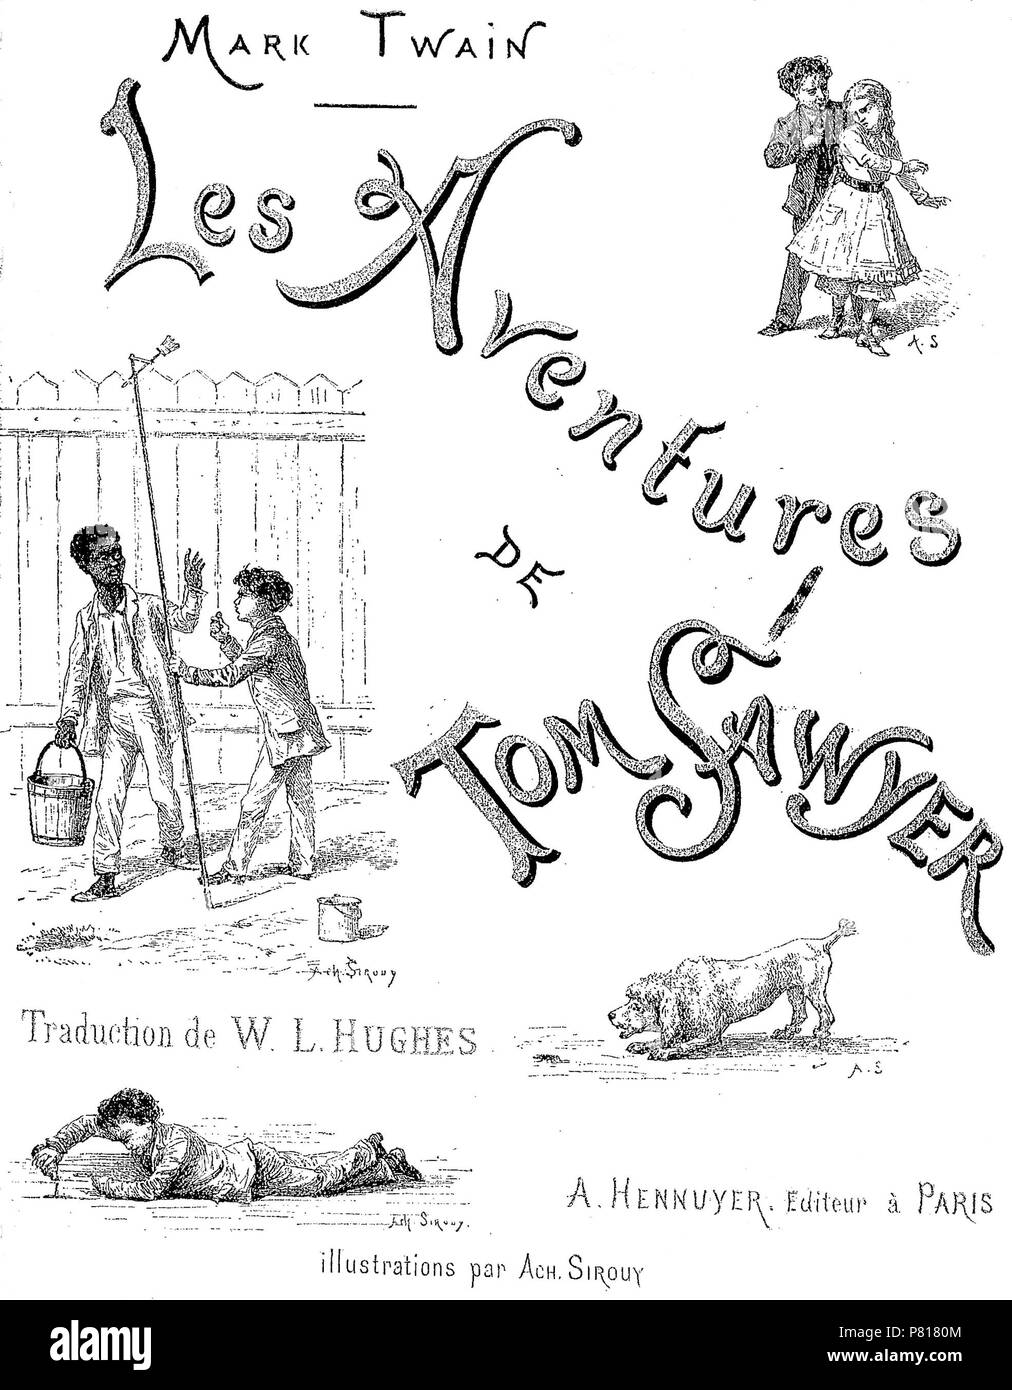 N/A. N/A 380 Twain - Les aventures de Tom Sawyer, trad Hughes, illust Sirouy, 1884, illust page 001 Stock Photo